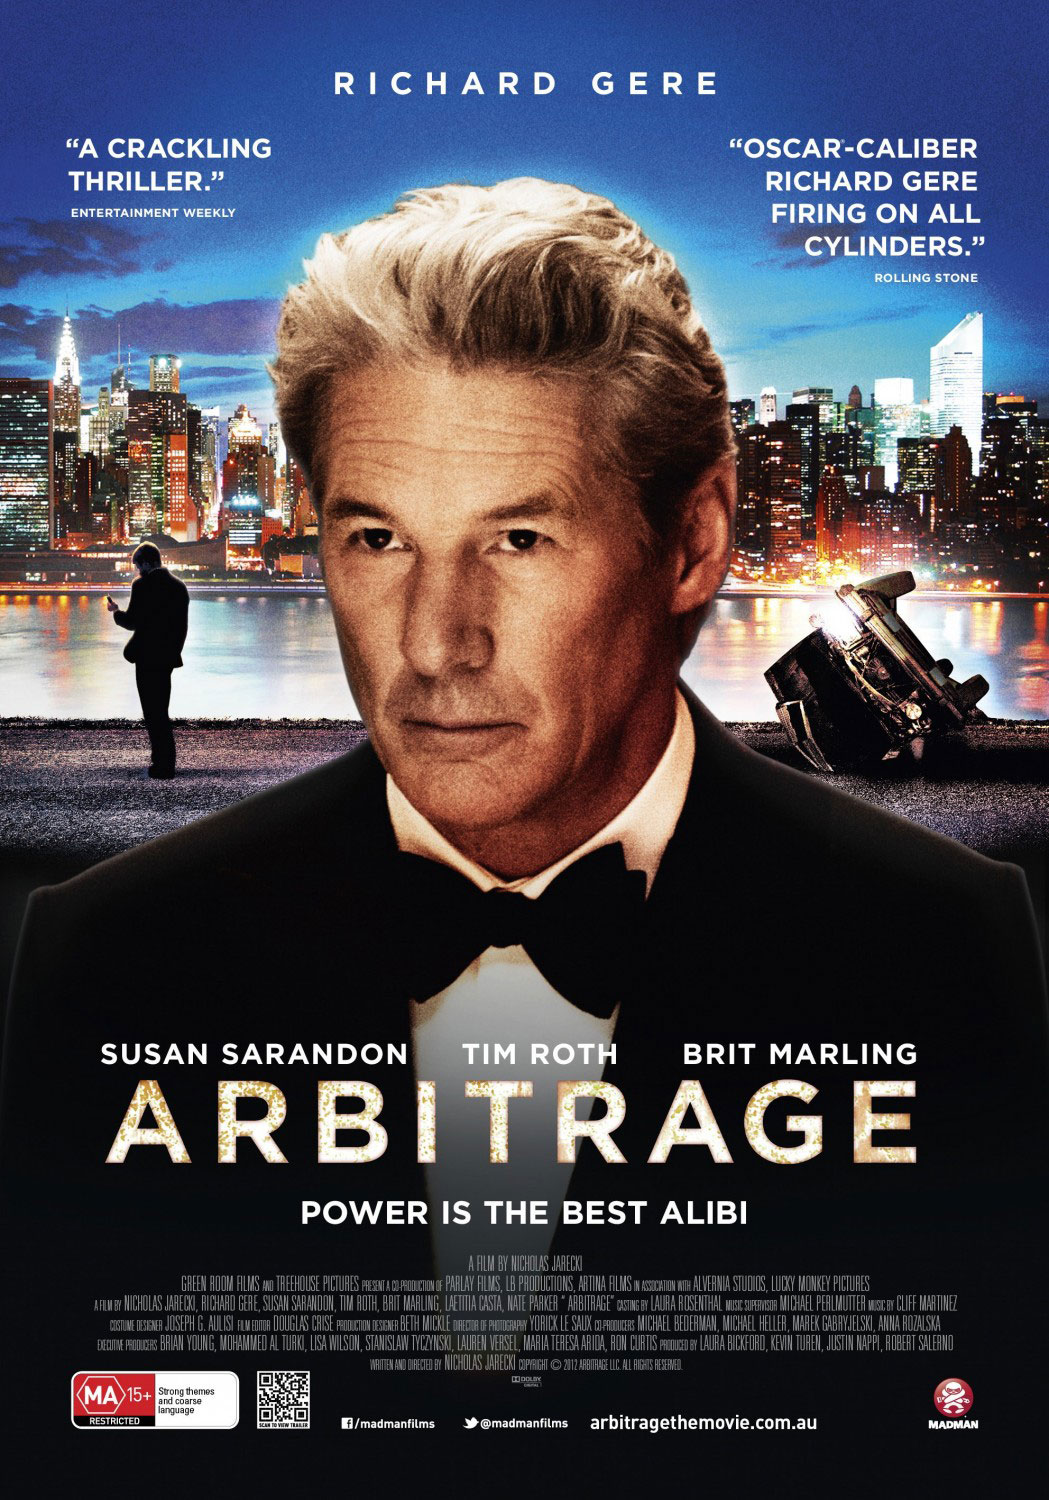 Richard Gere Movie Arbitrage